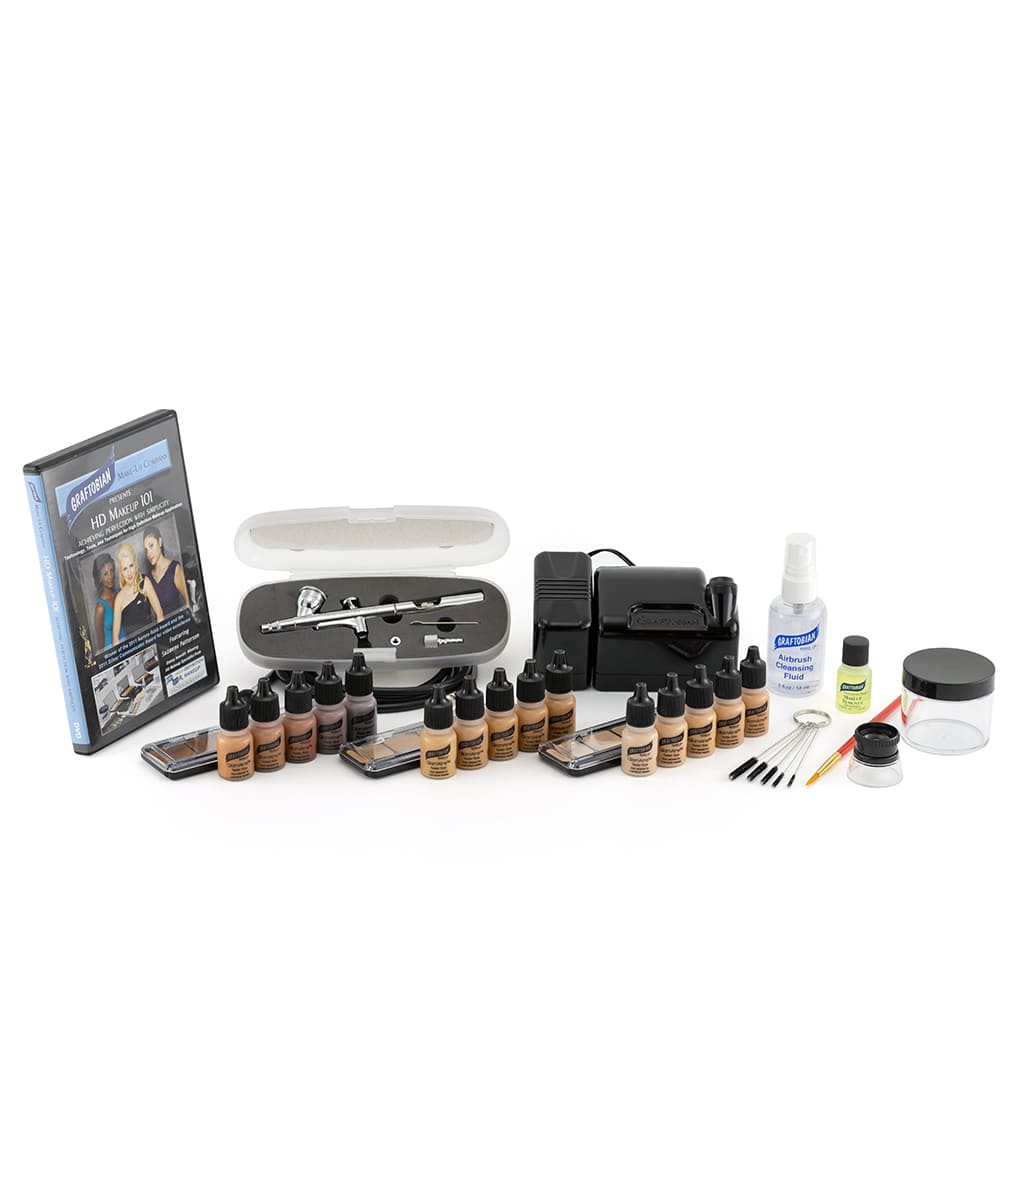 Airbrush Cleaning Kits – Graftobian Make-Up Company